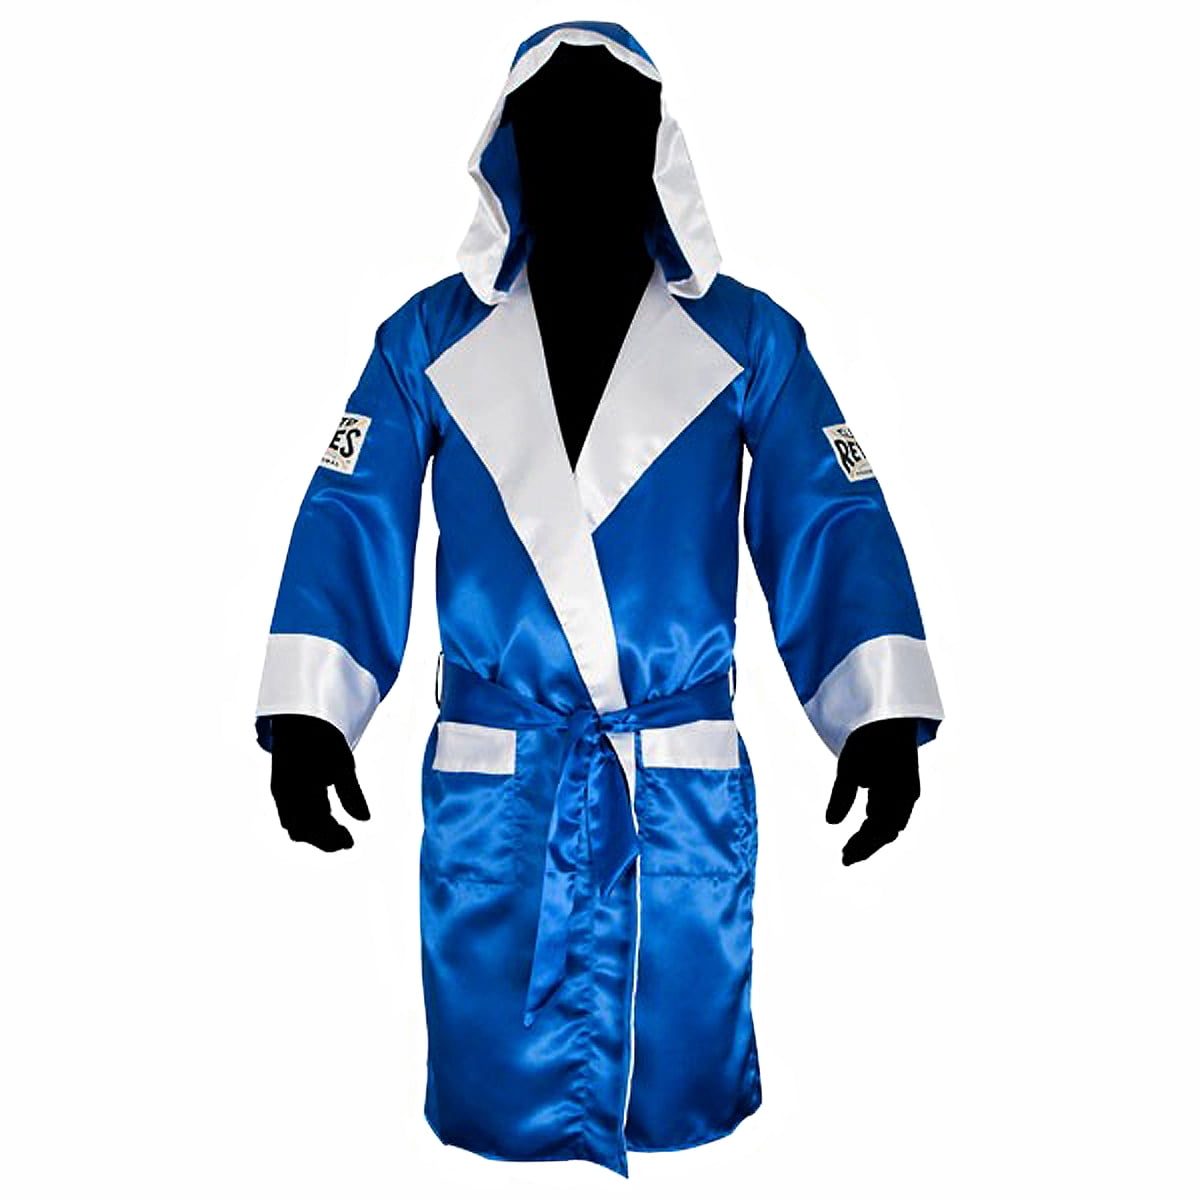 Cleto Reyes Satin Boxing Robe with Hood   Blue/White   Walmart.com